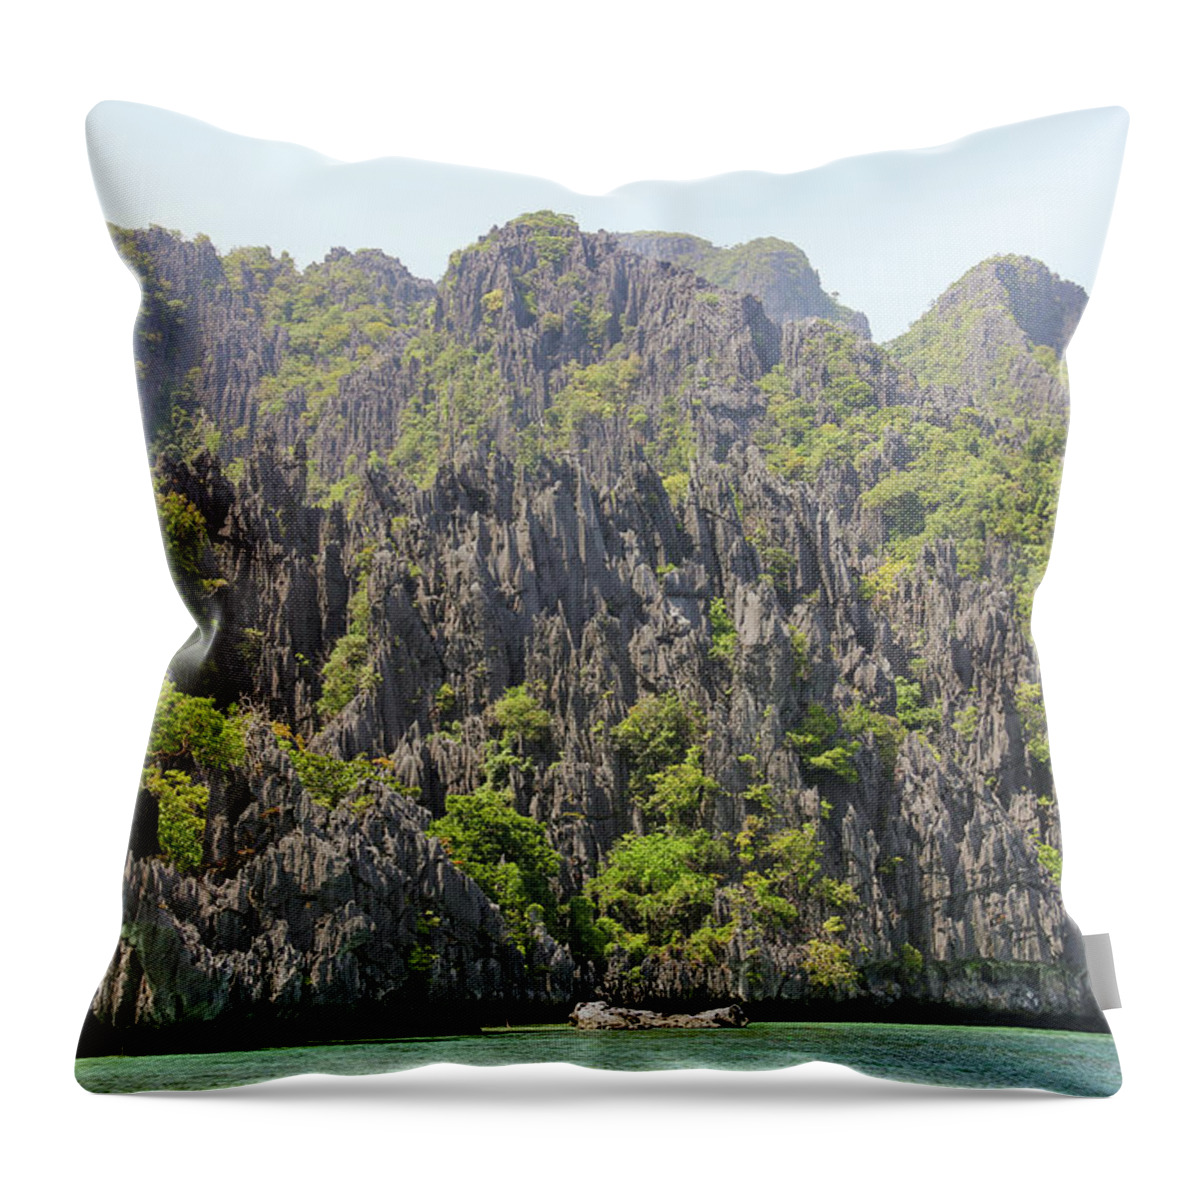 Palawan Throw Pillow featuring the photograph Palawan Karst Landscape by Josu Ozkaritz